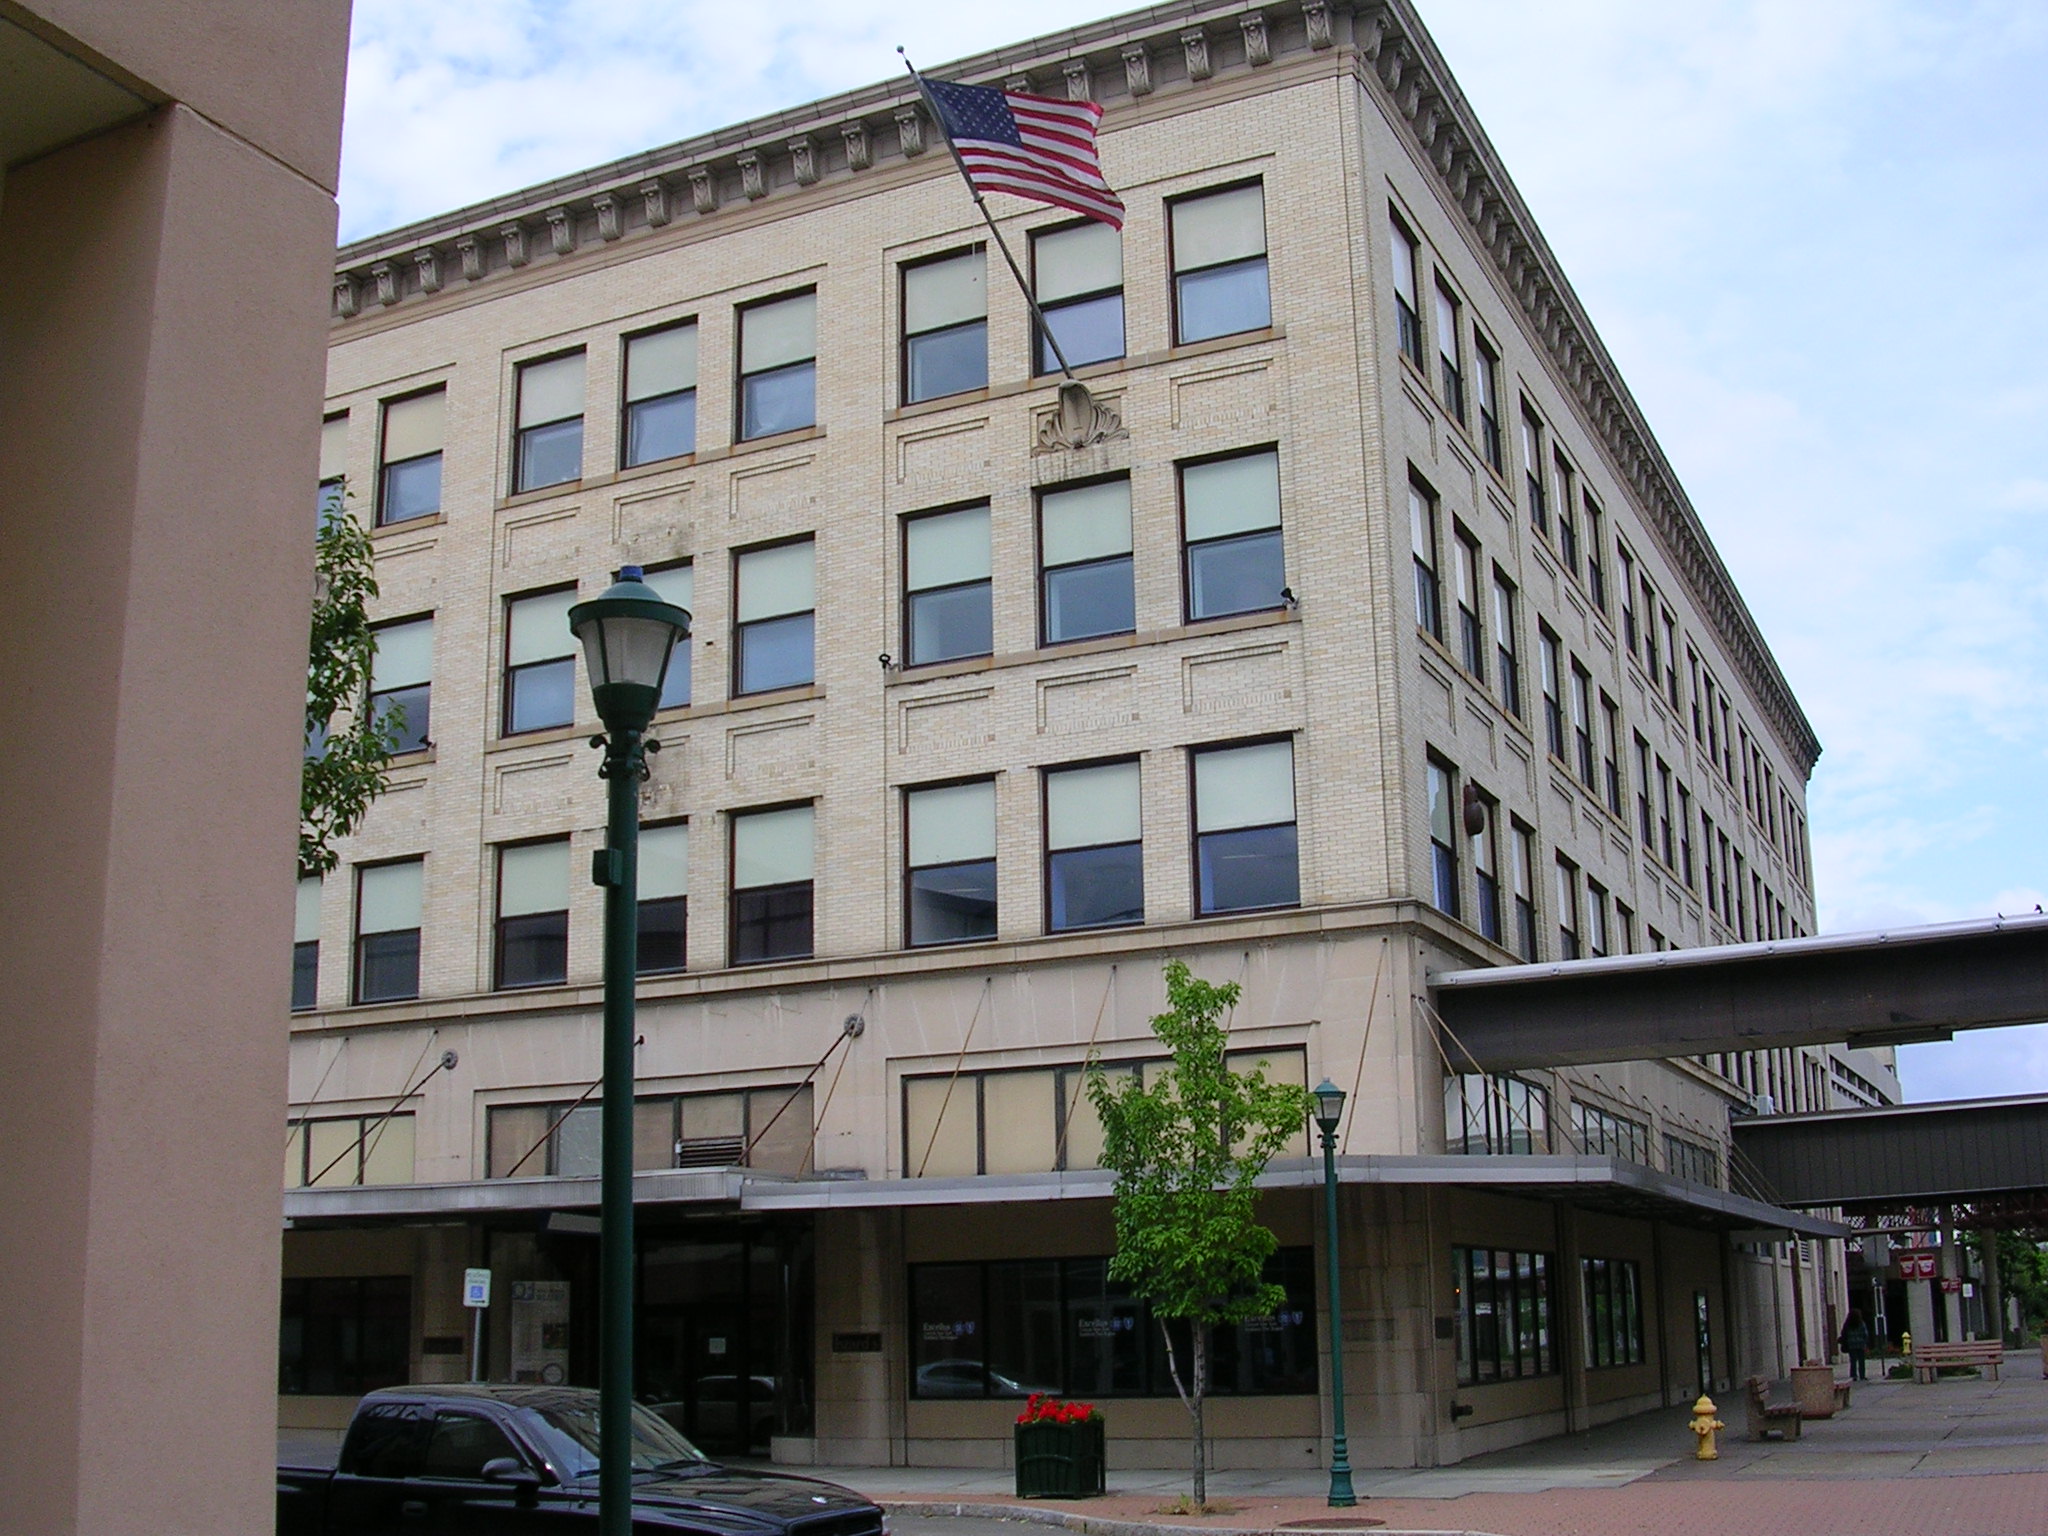 The old Izard's Building on Main Street.